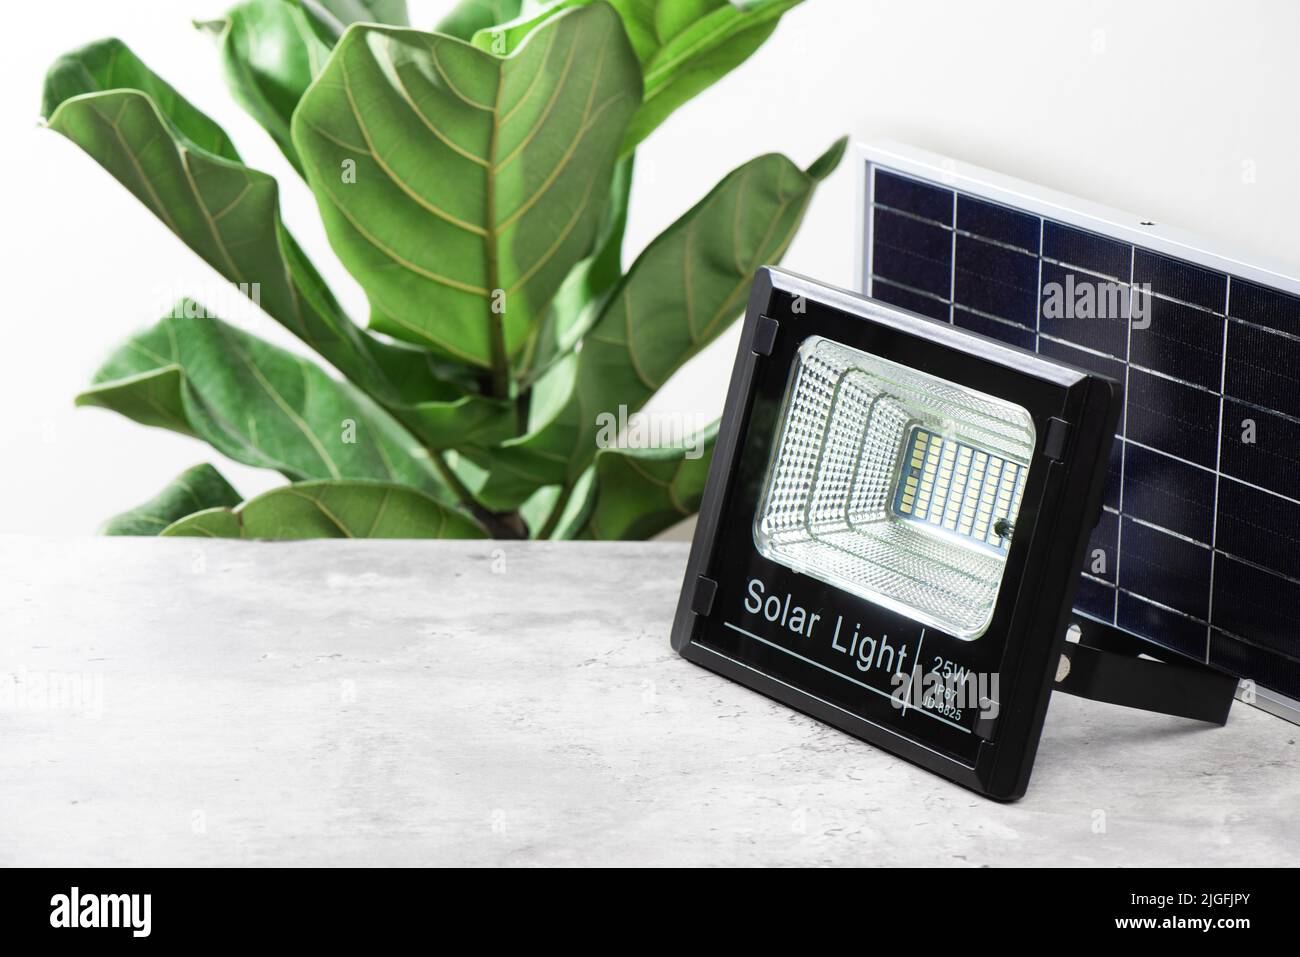 LED sport light with solar panel. Energy saving concept. Stock Photo